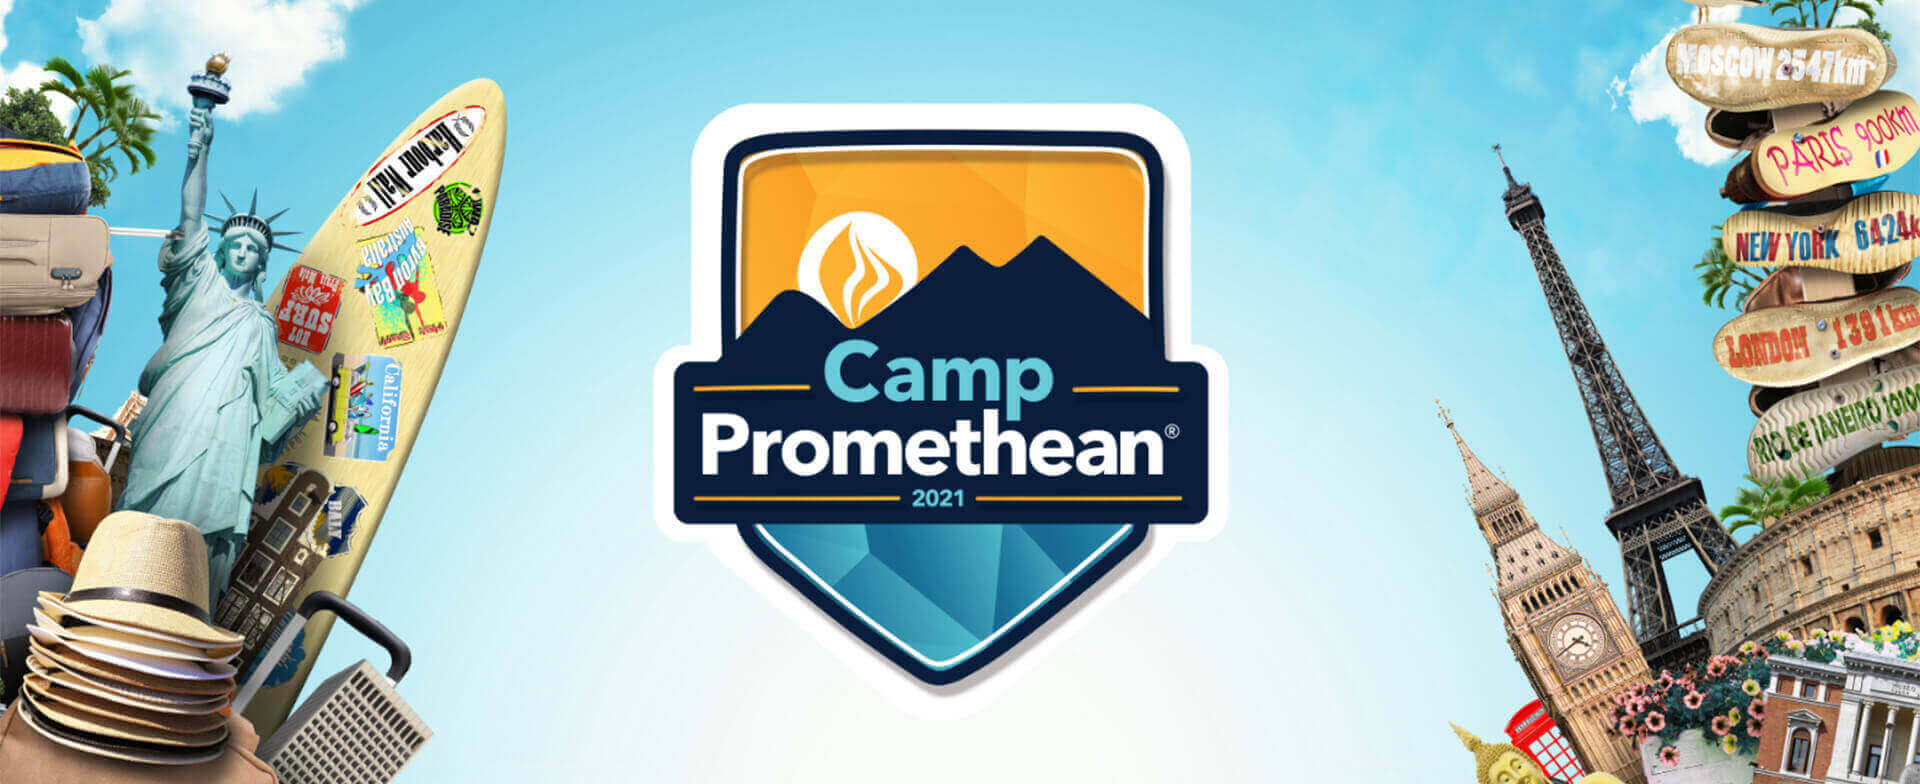 Camp Promethean 2021 Logo Image